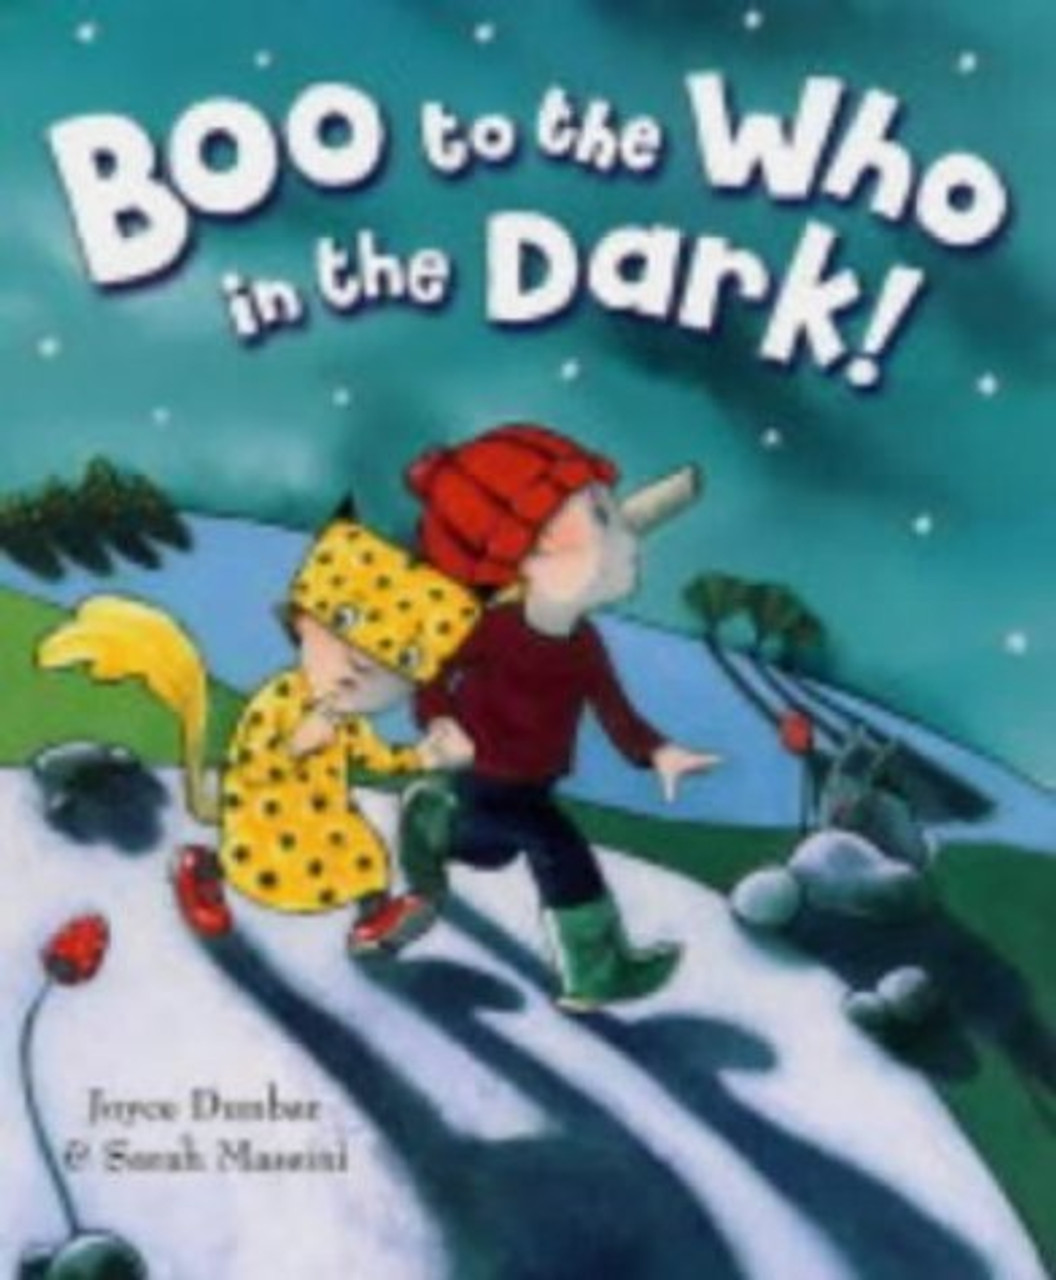 Joyce Dunbar ,  Sarah Massini / Boo to the Who in the Dark! (Children's Coffee Table book)